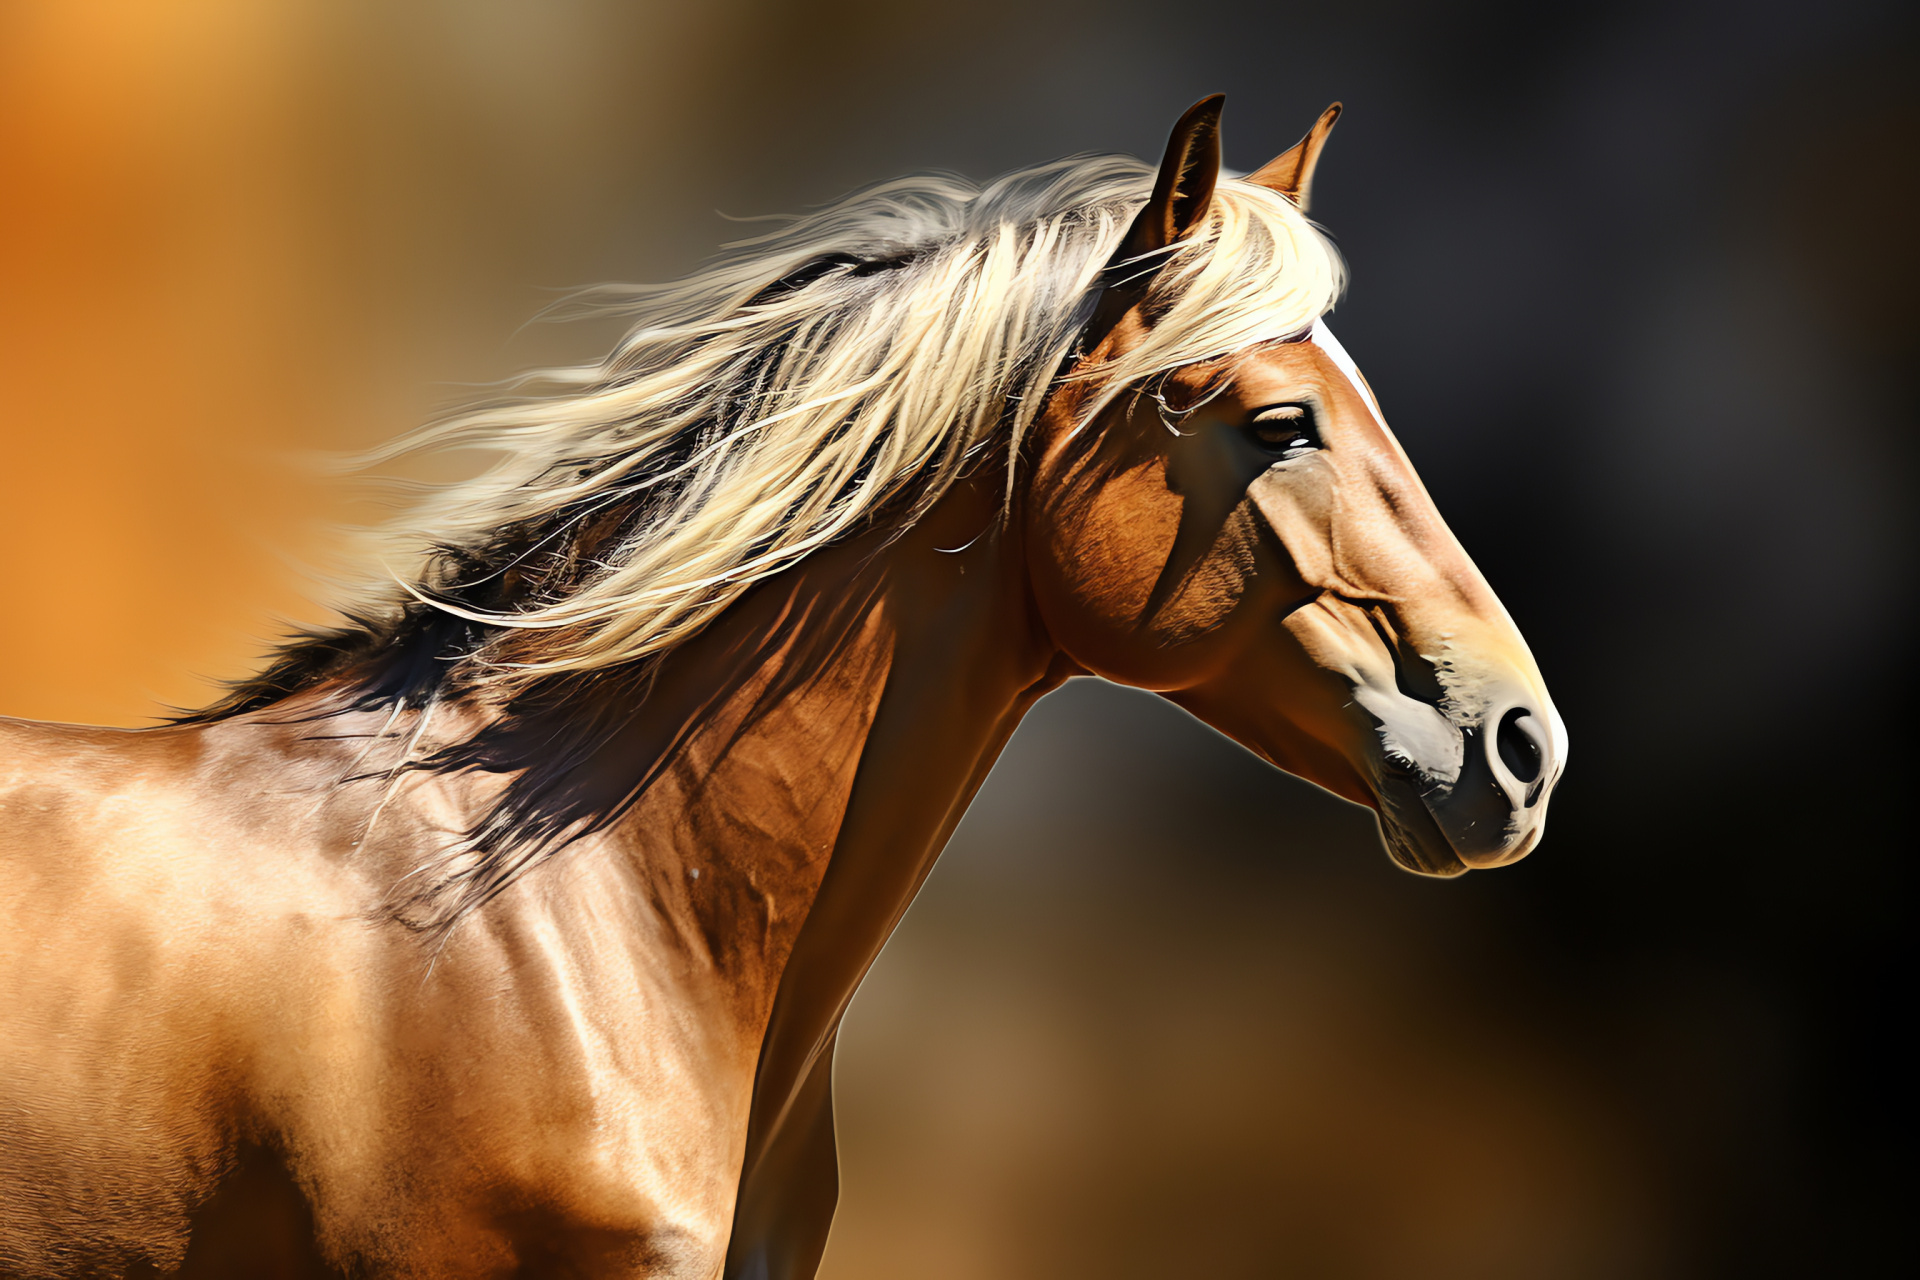 Wild Stallion, Sunlit mane, Golden equine, Pastoral grazer, Free-ranging herd, HD Desktop Image